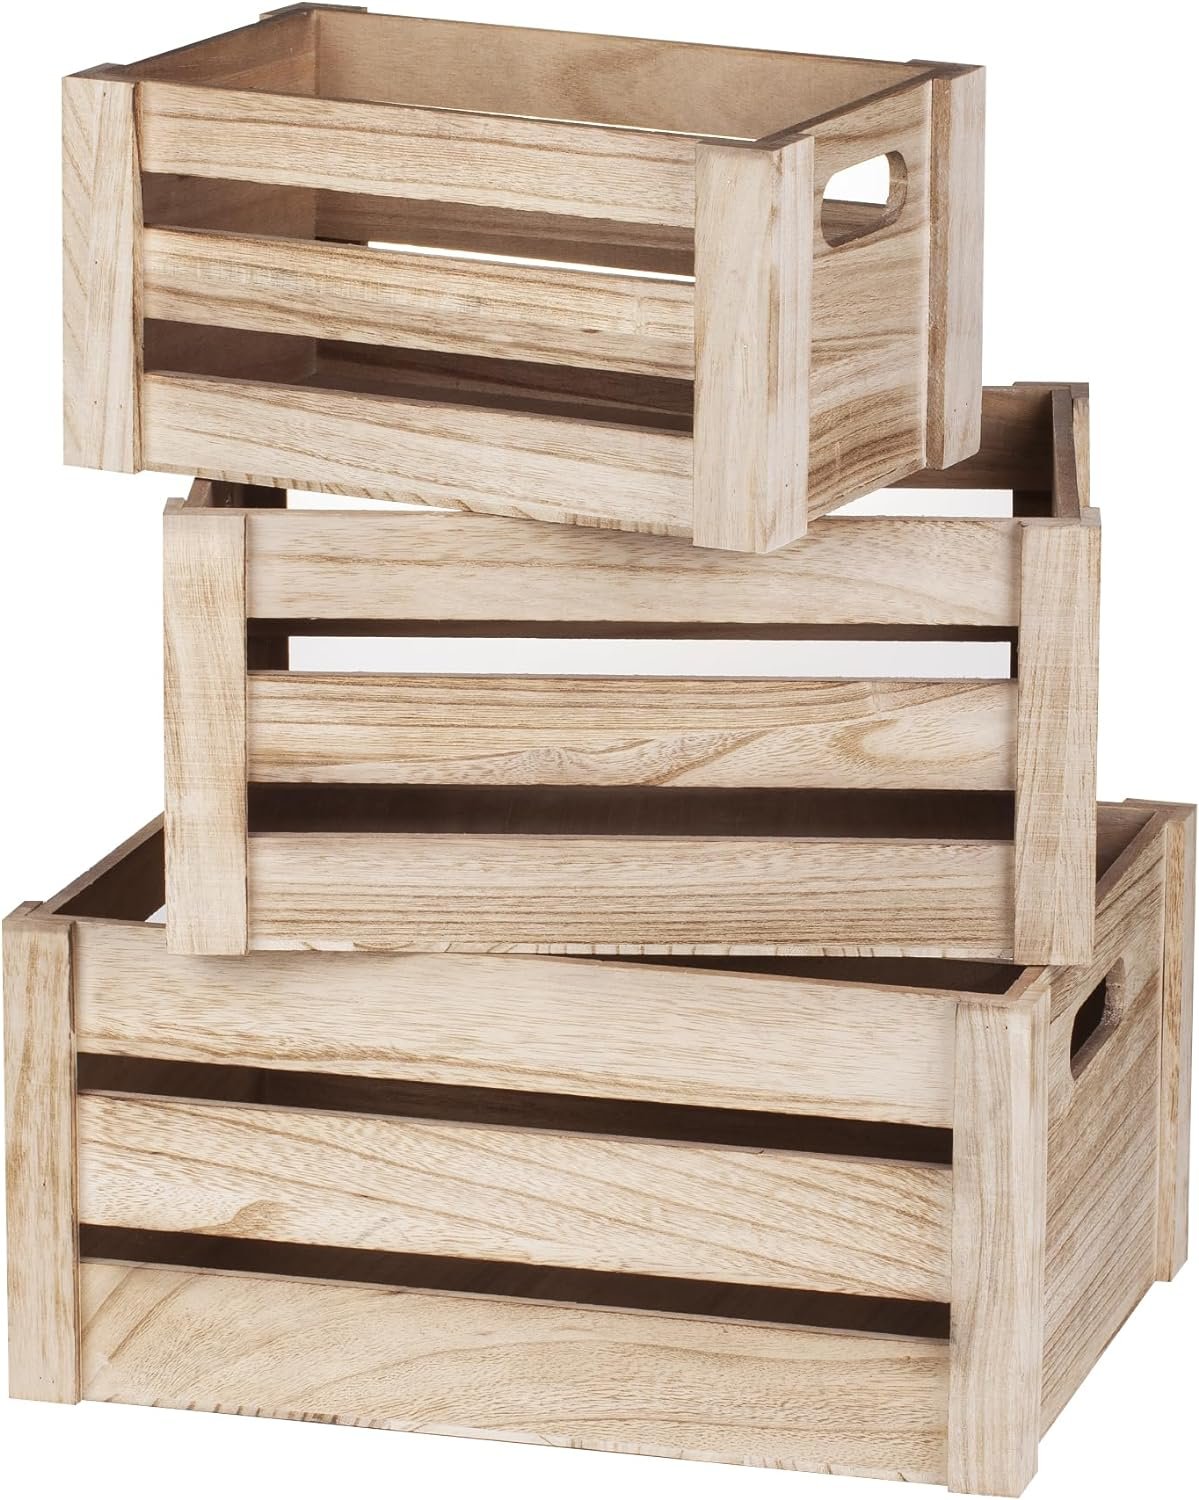 Uziass Wooden Storage Crates Set Review